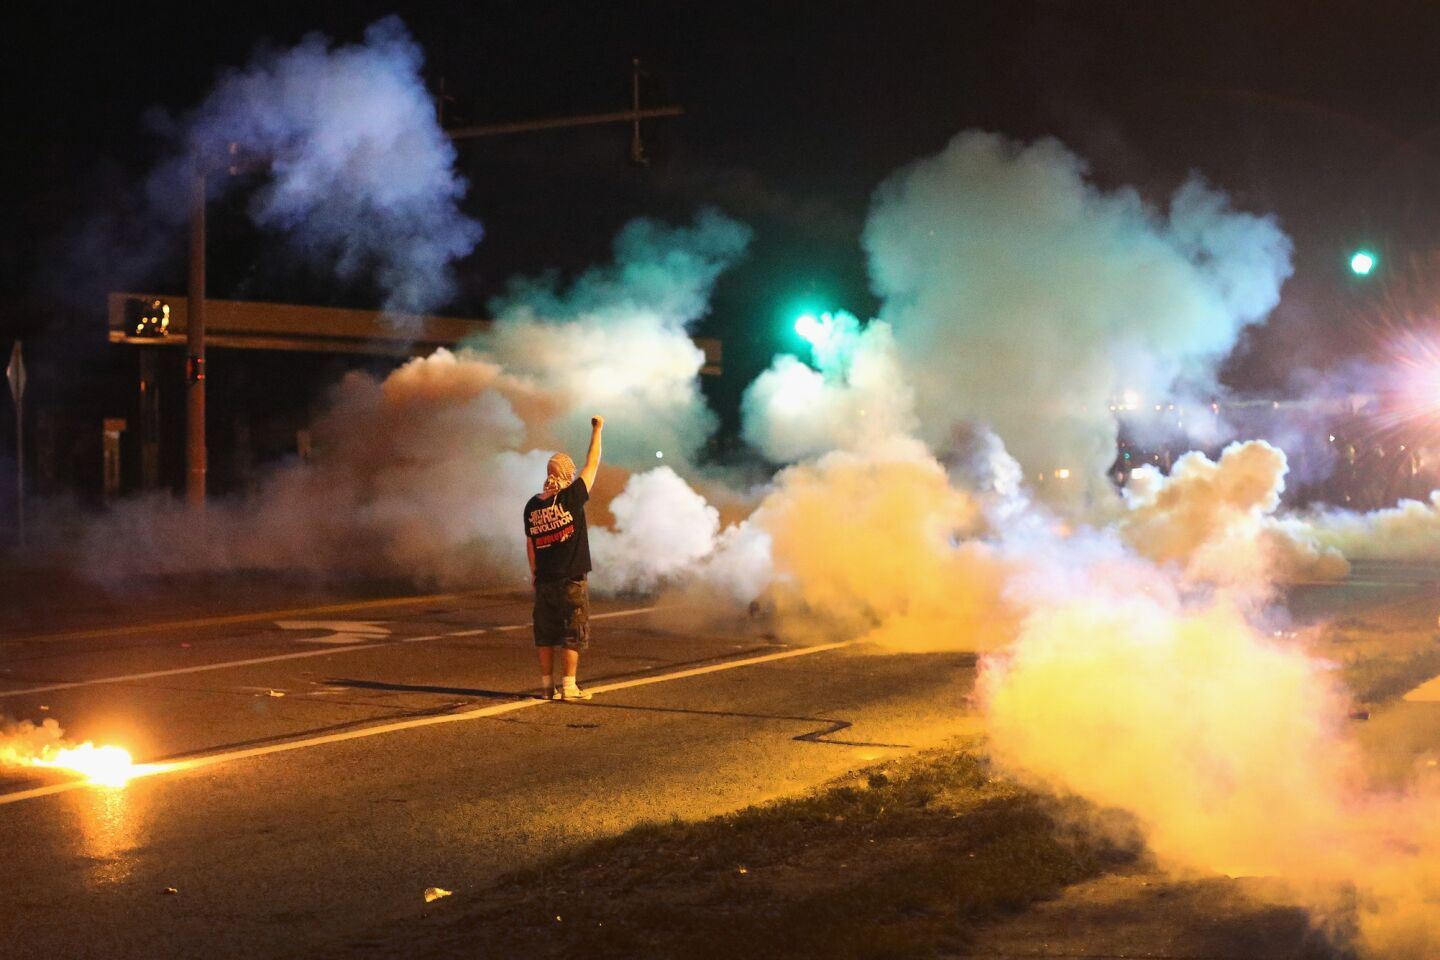 Conflict in Ferguson, Mo.